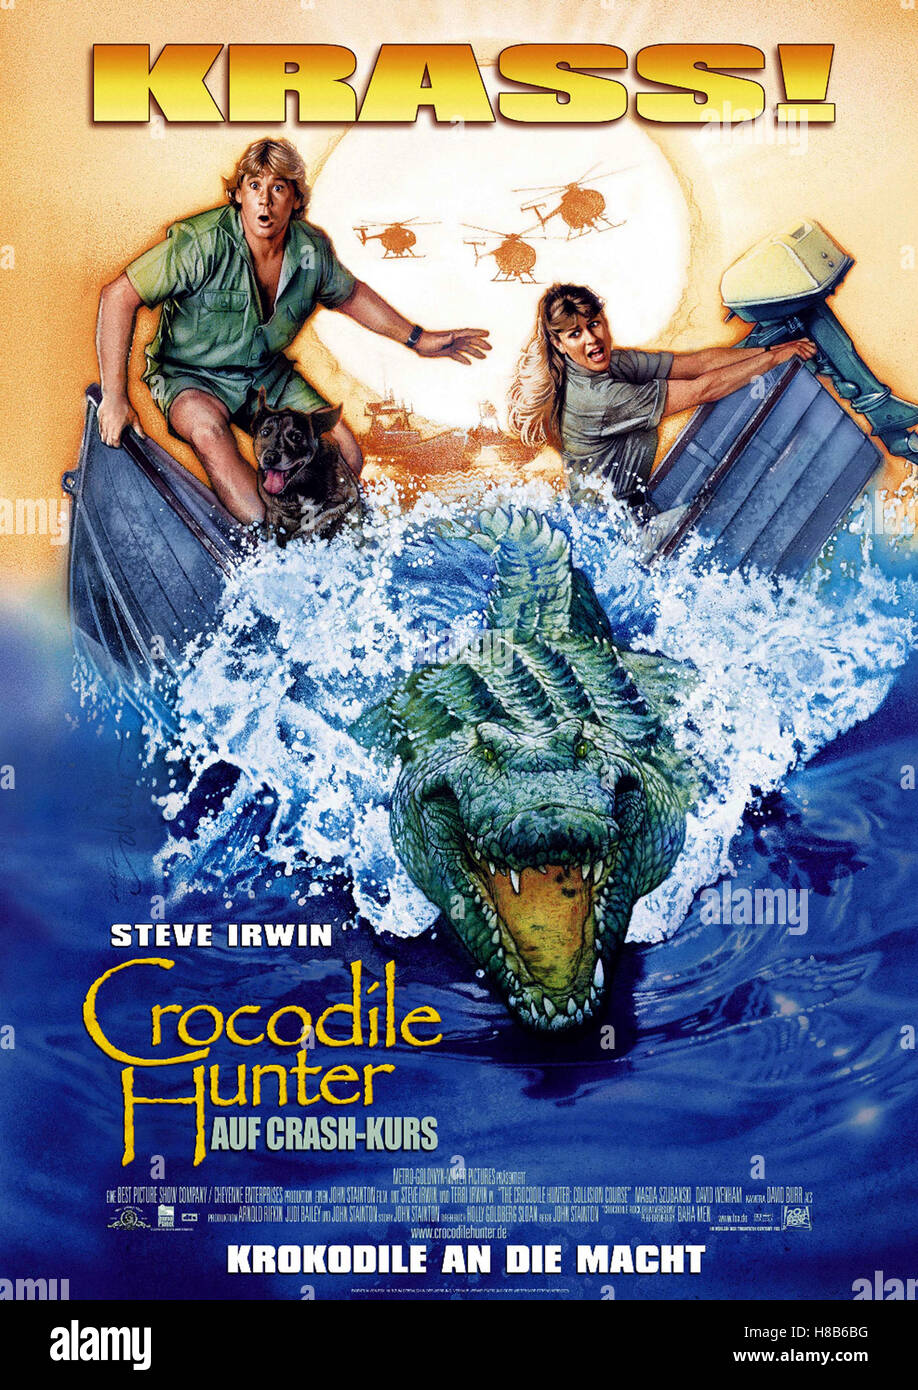 Crocodile Hunter - Auf Crash-Kurs, (THE CROCODILE HUNTER: COLLISION COURSE) AUS-USA 2002, Regie: John Stainton, STEVE IRWIN, Stichwort: Plakat Stock Photo